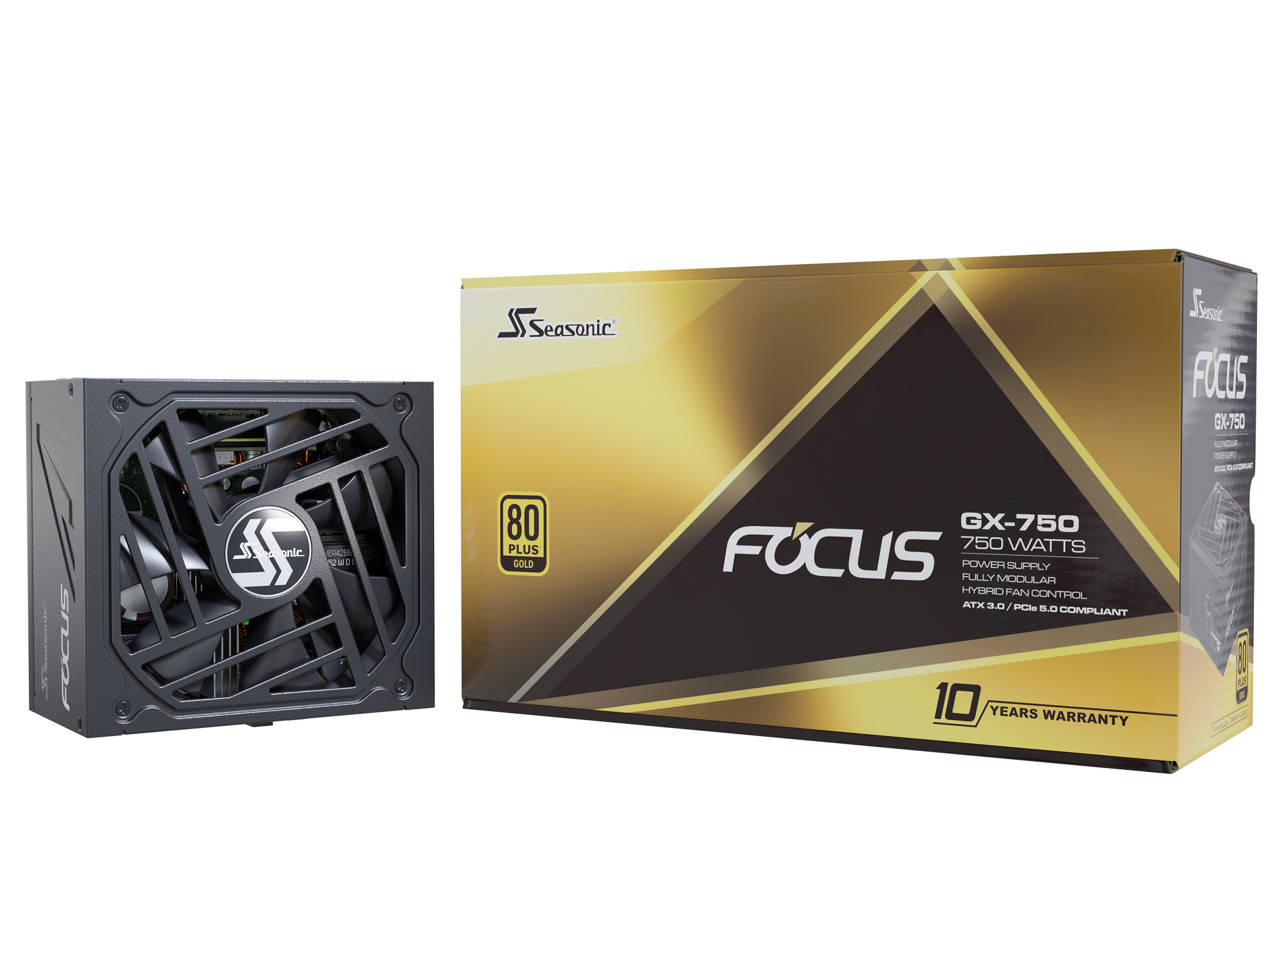 Seasonic 750W FOCUS V3 GX-750, 80+ Gold, ATX 3.0 & PCIe 5.0, Full-Modular PSU